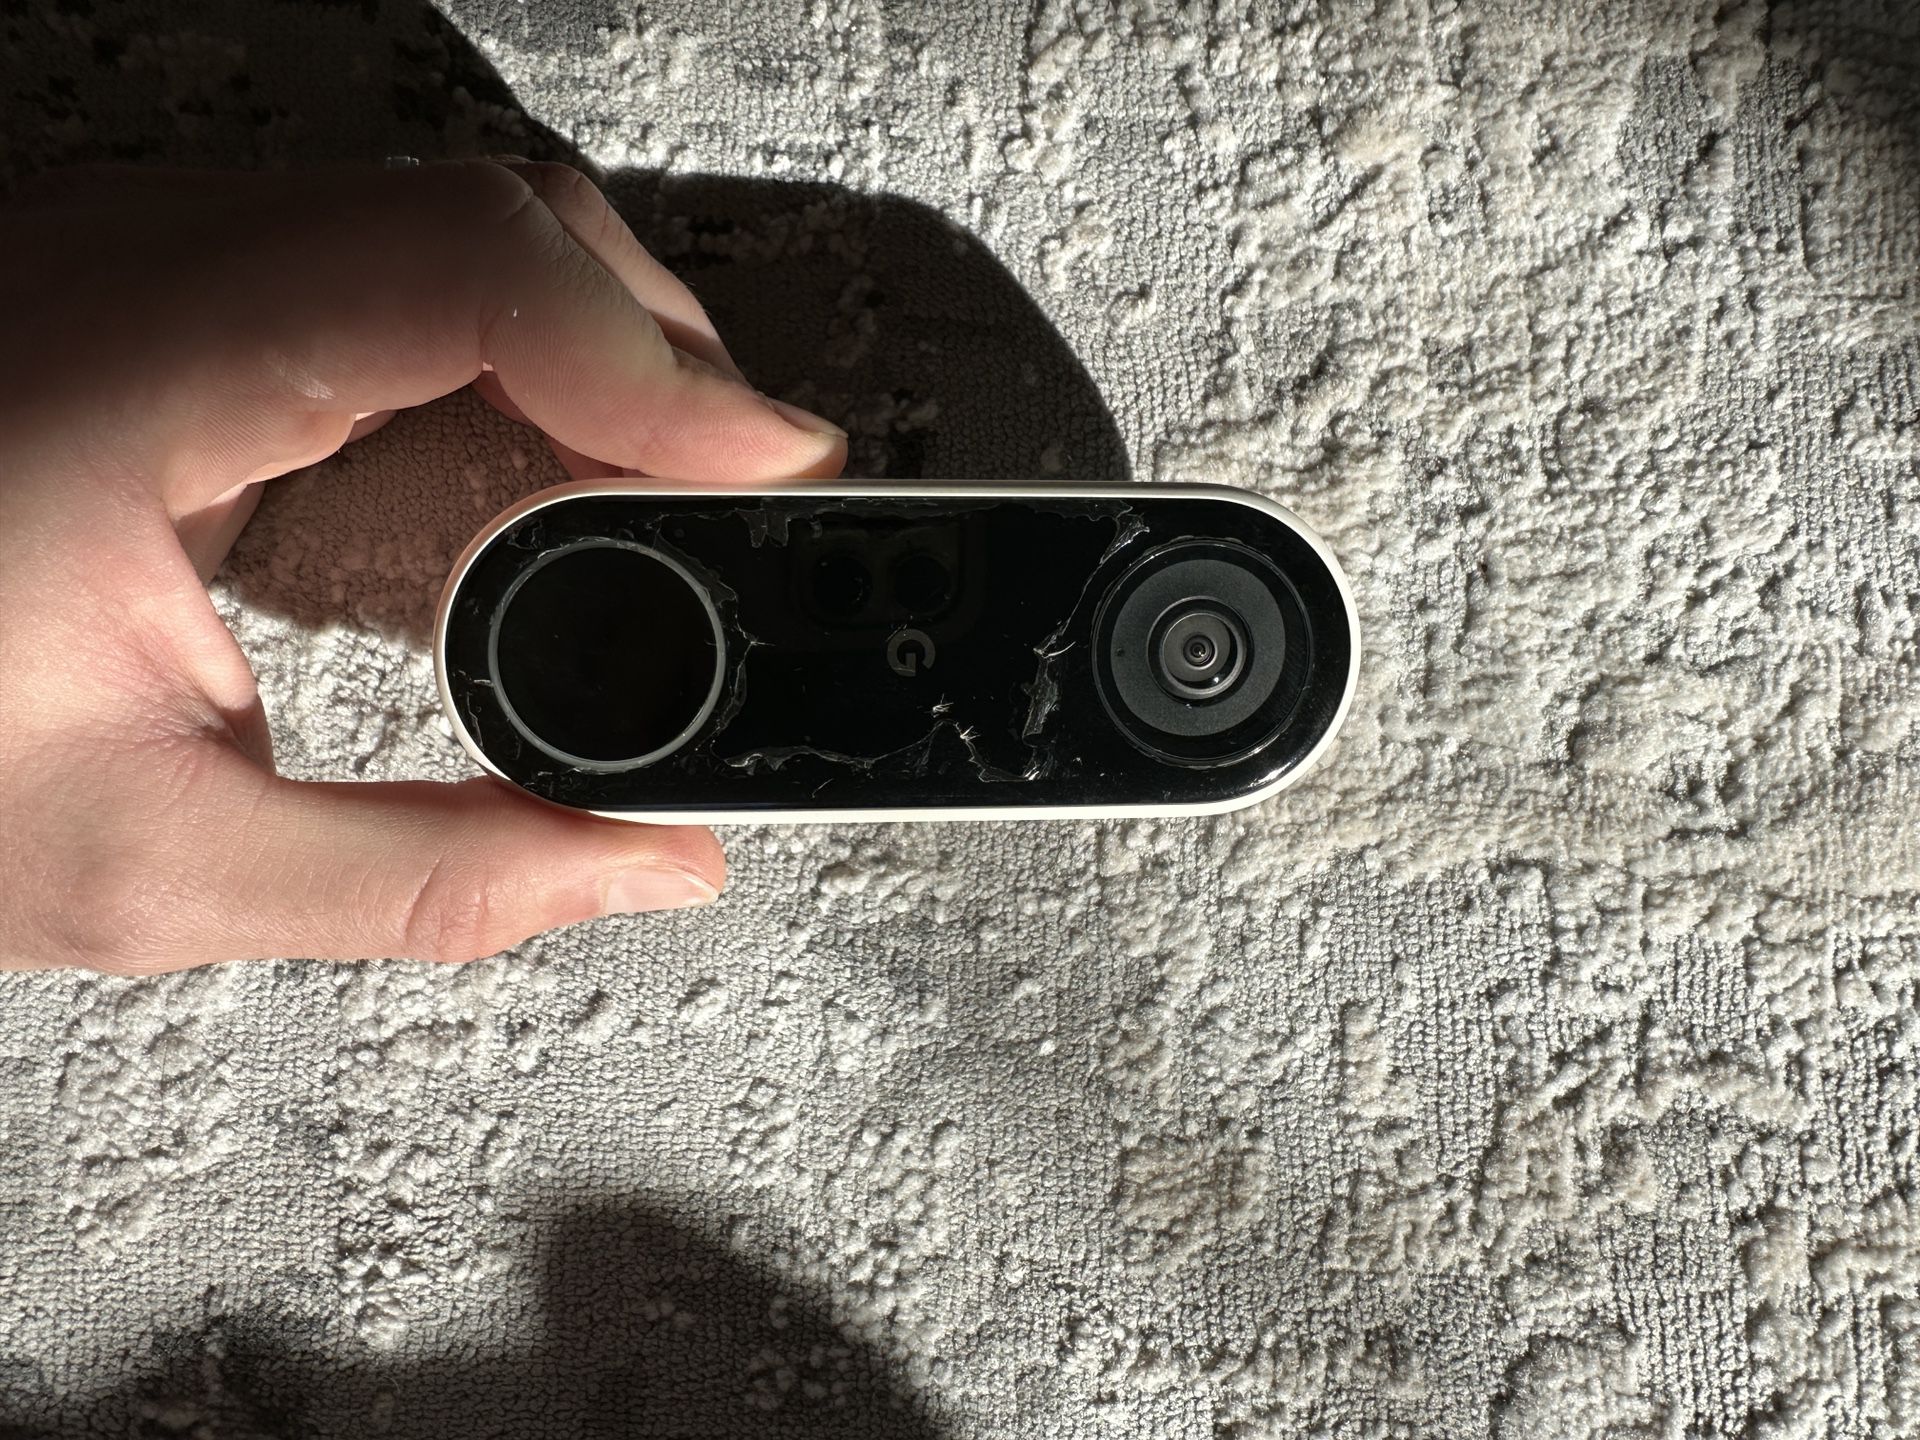 Nest Video Doorbell Camera Wired